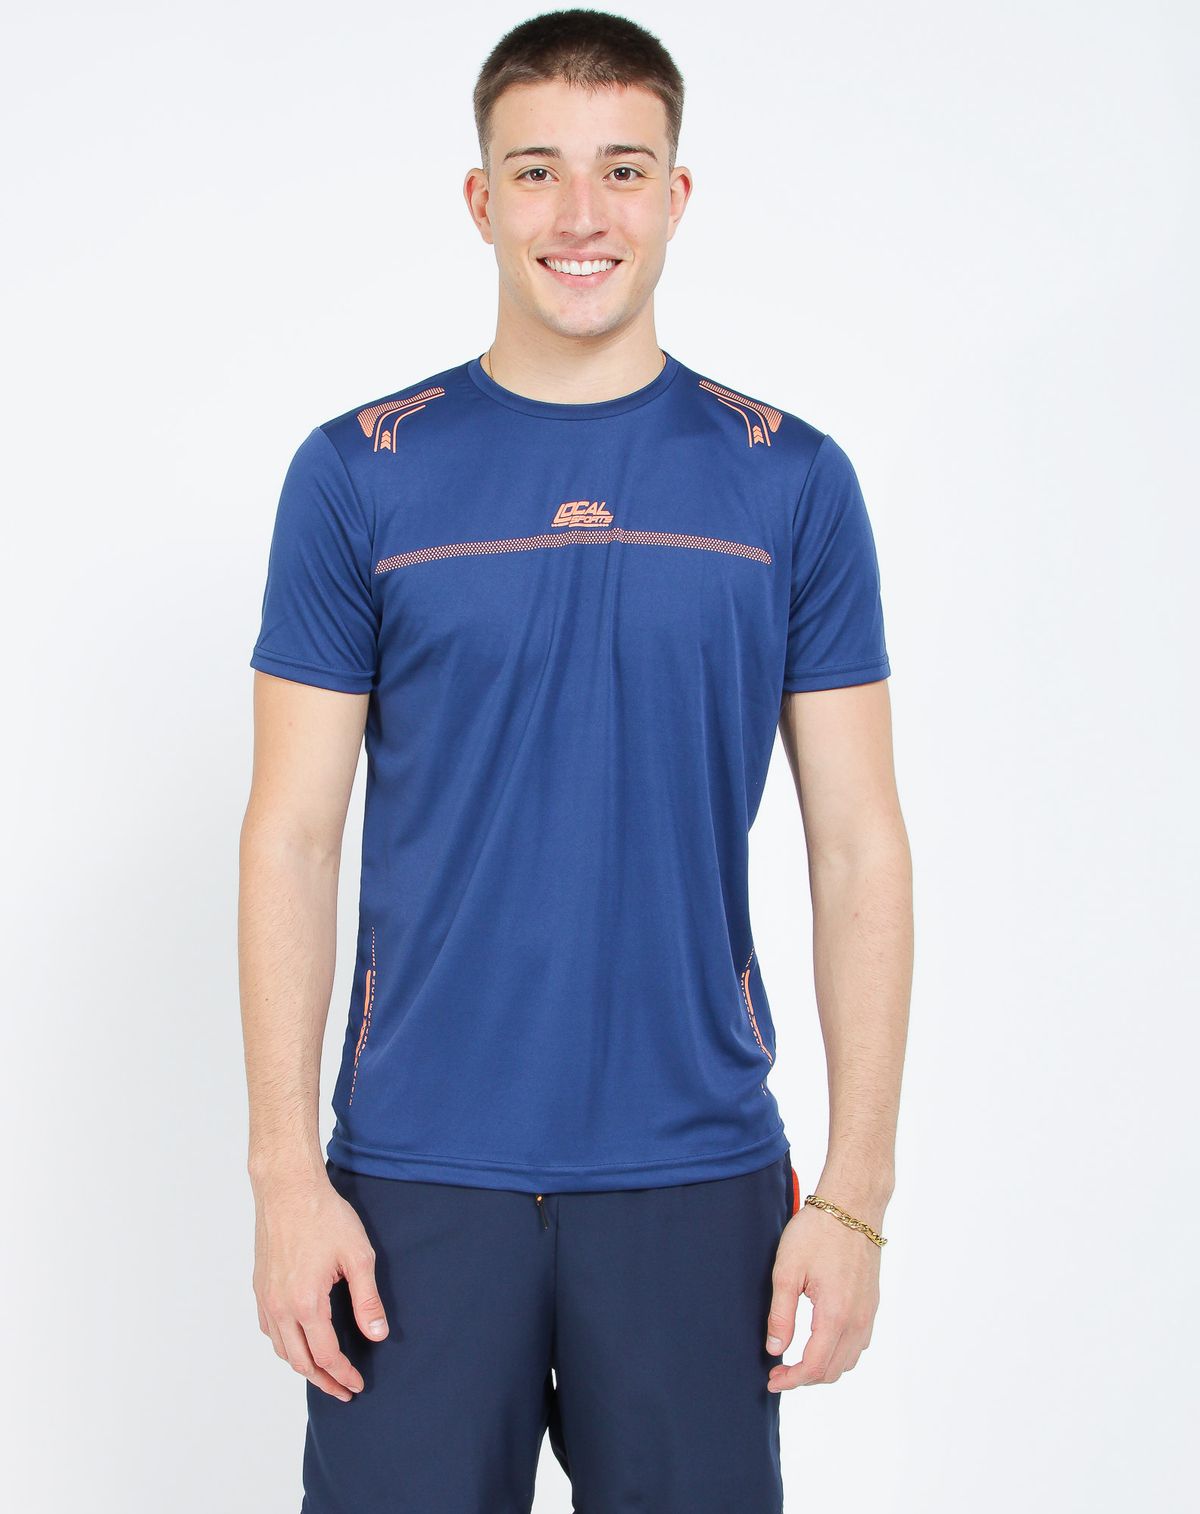 677670001-camiseta-esportiva-manga-curta-masculina-recortes-marinho-p-68b